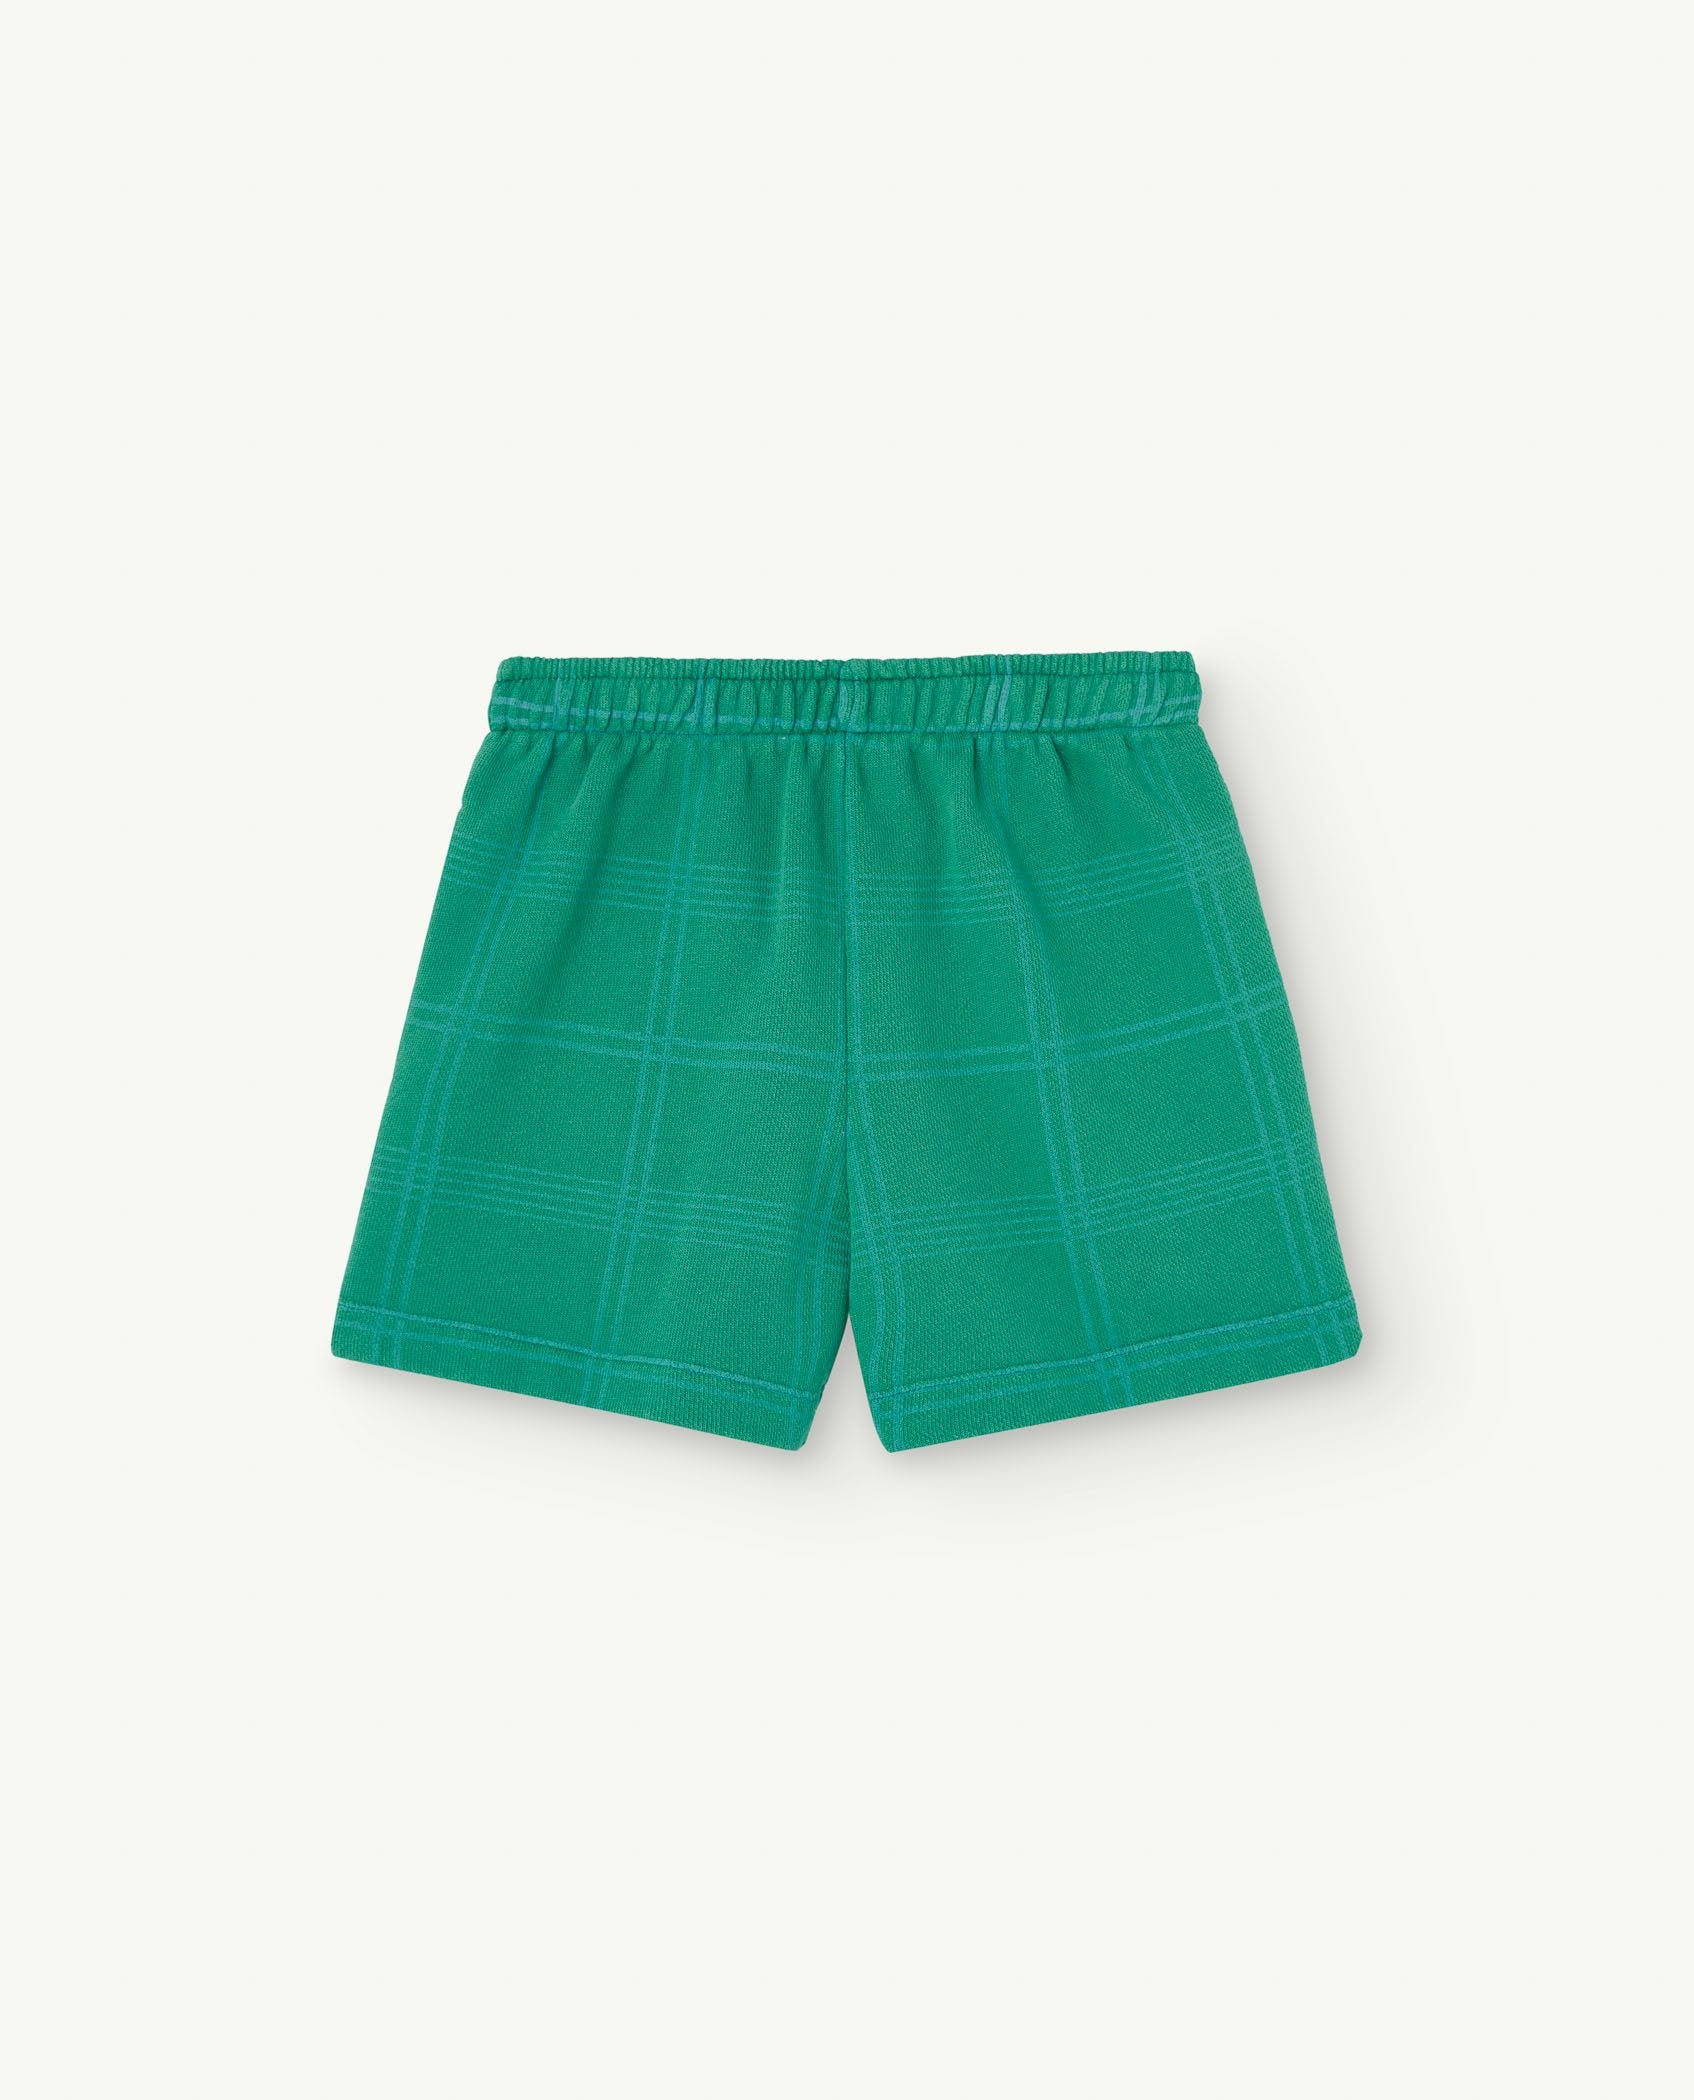 Green Hedgehog Shorts PRODUCT BACK